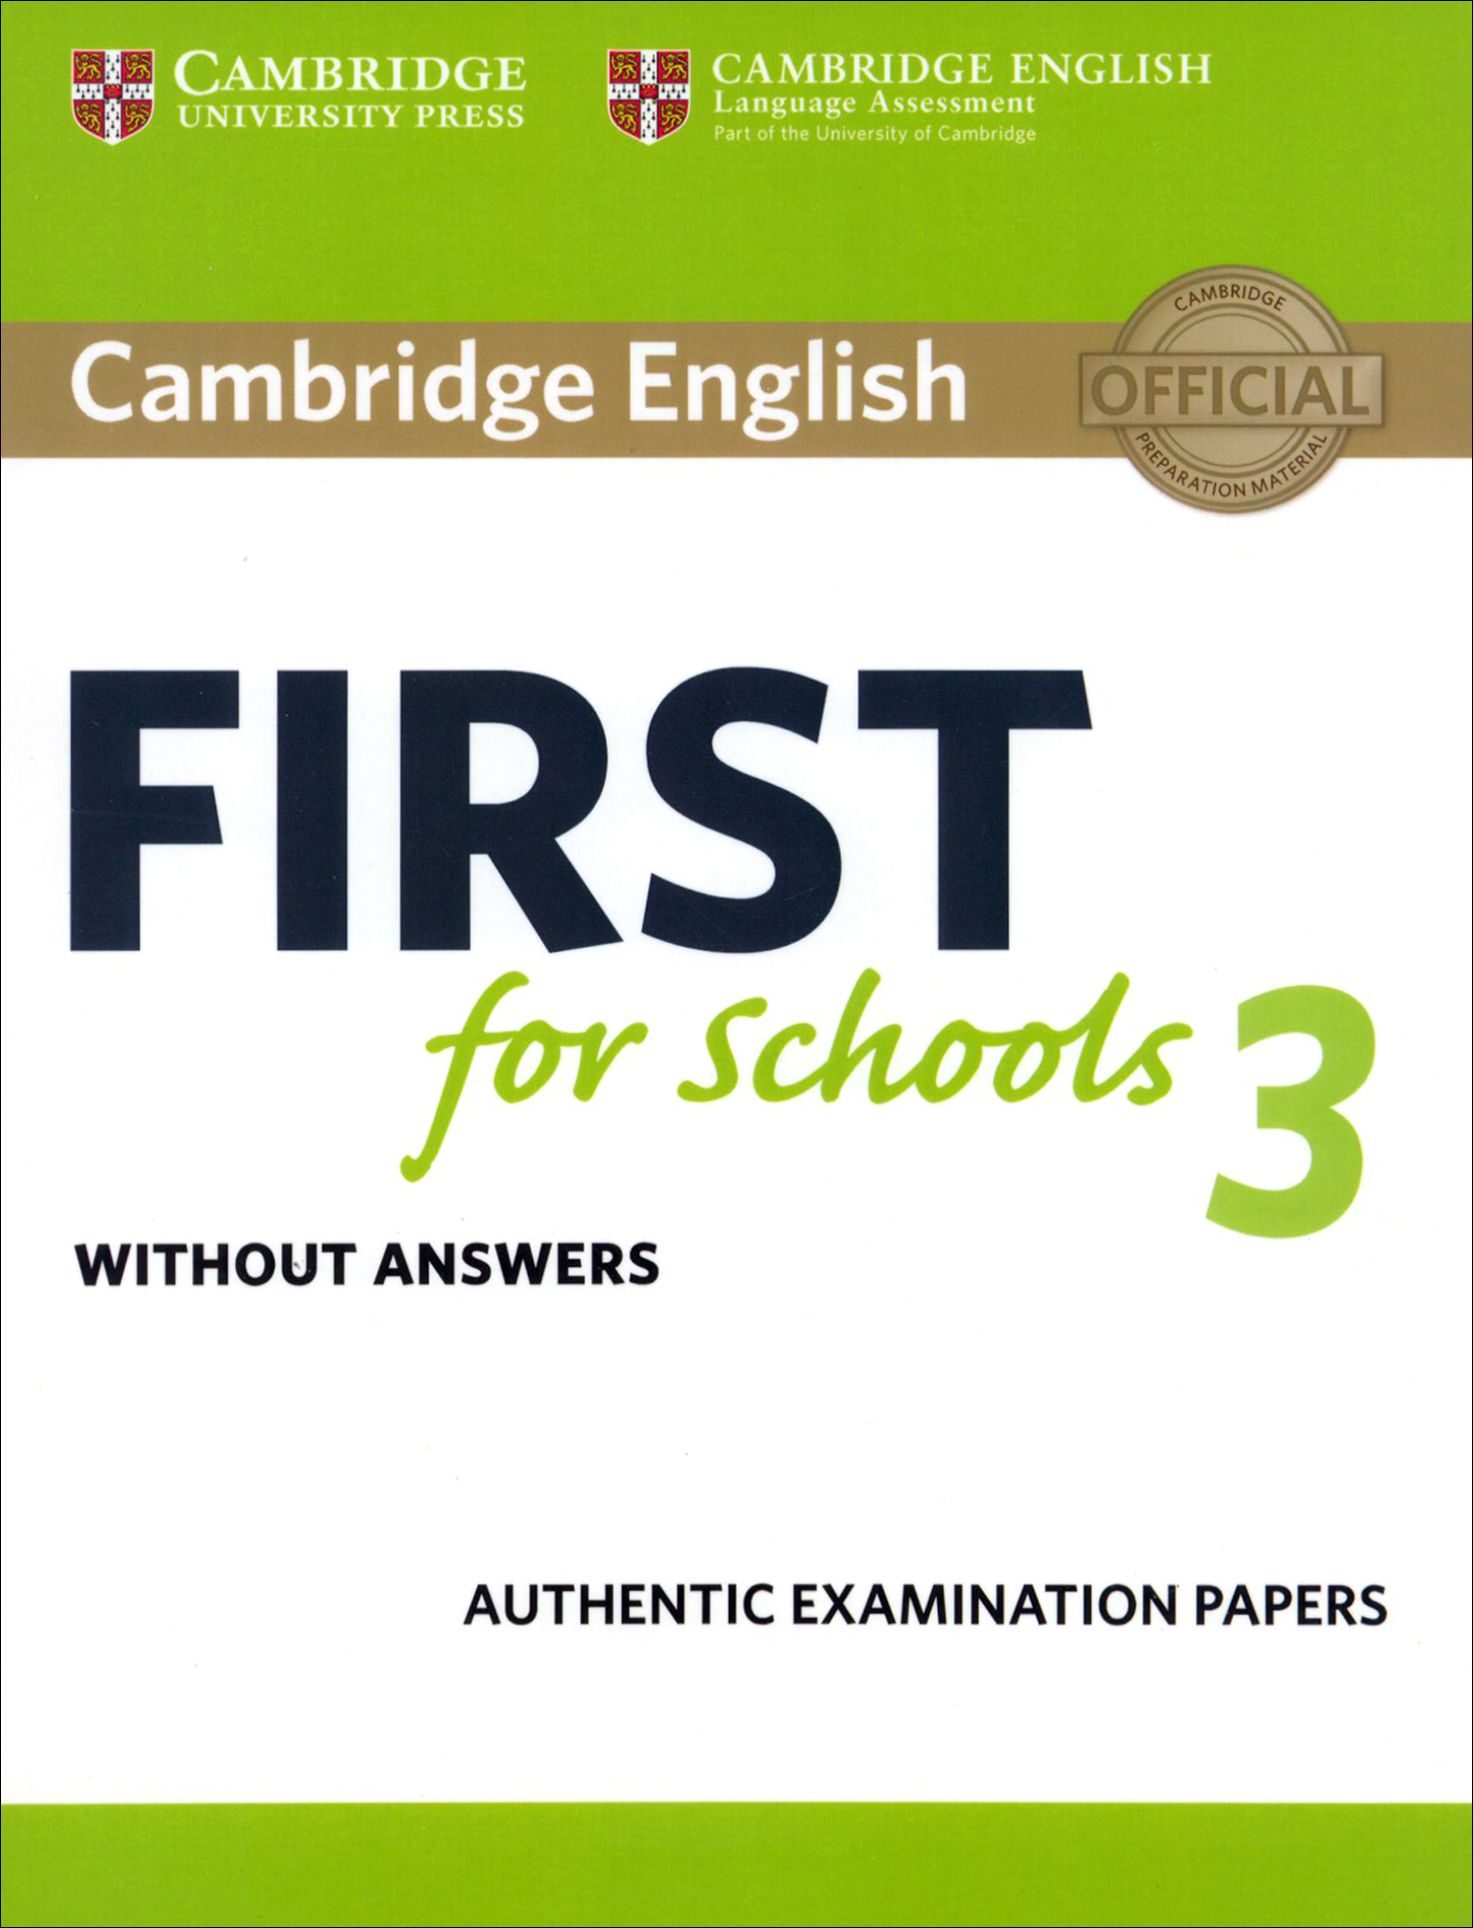 Cambridge english first. Учебник Cambridge first Certificate. FCE for School Practice Tests 2. Учебник Cambridge English FCE. Cambridge English first for Schools 1.